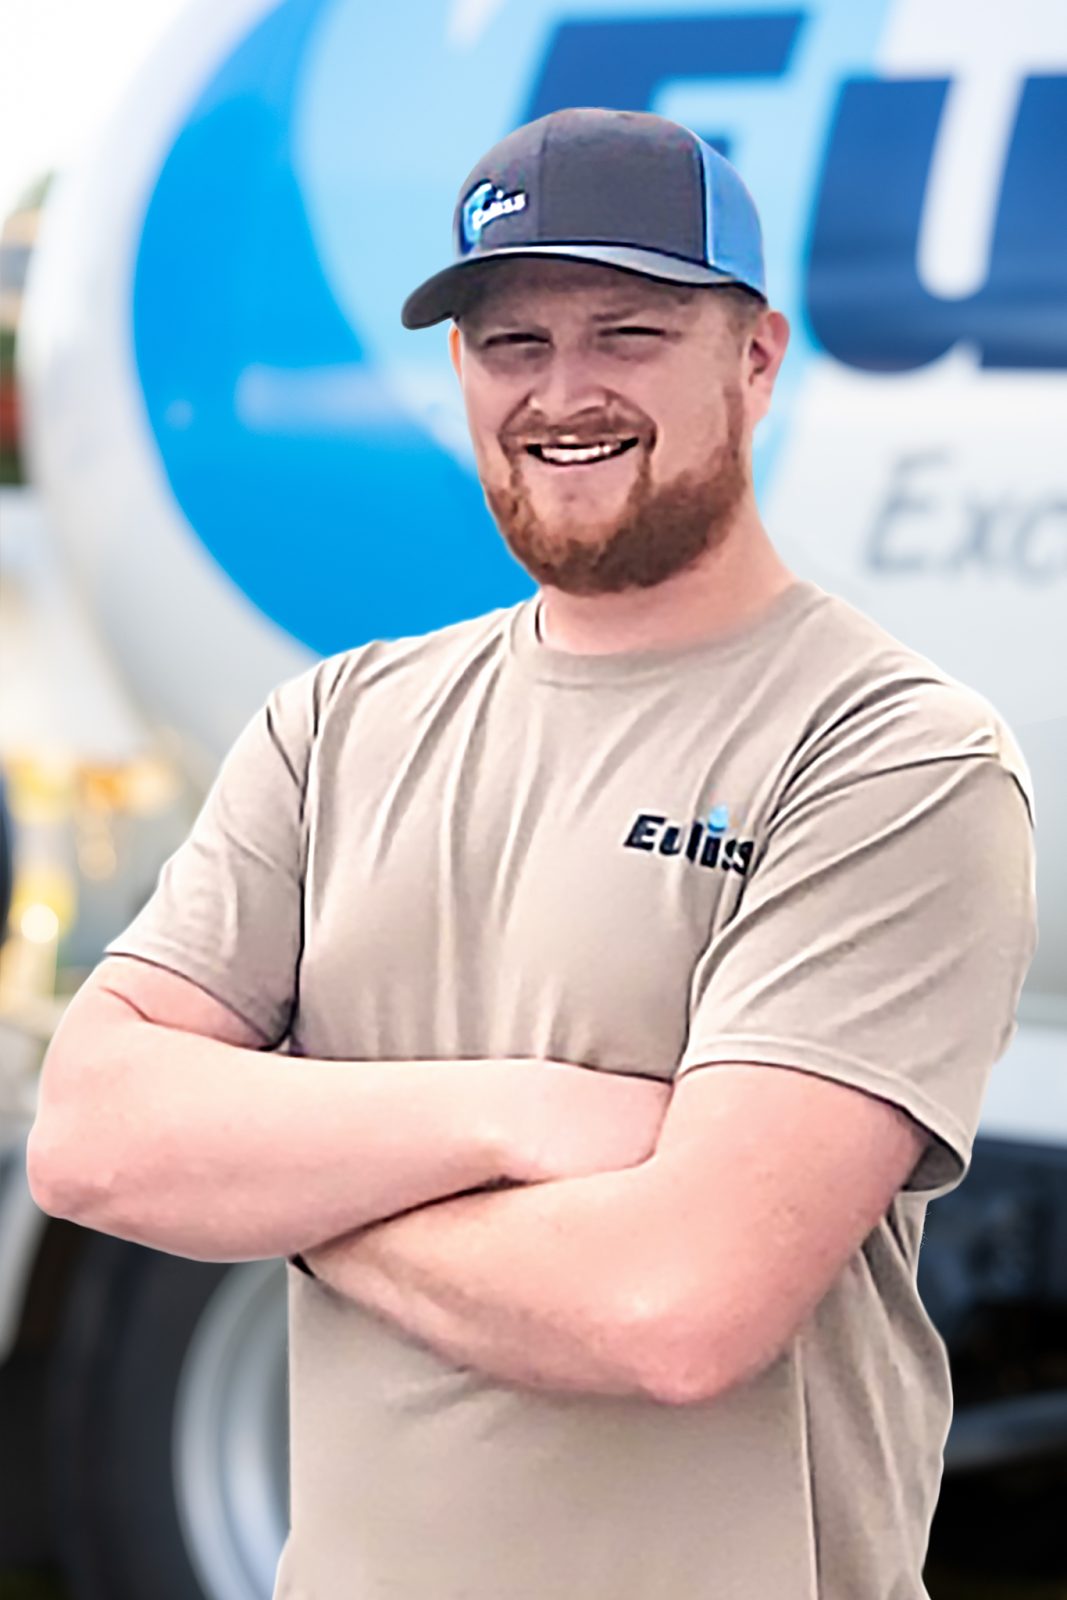 Euliss employee Chris Wheless